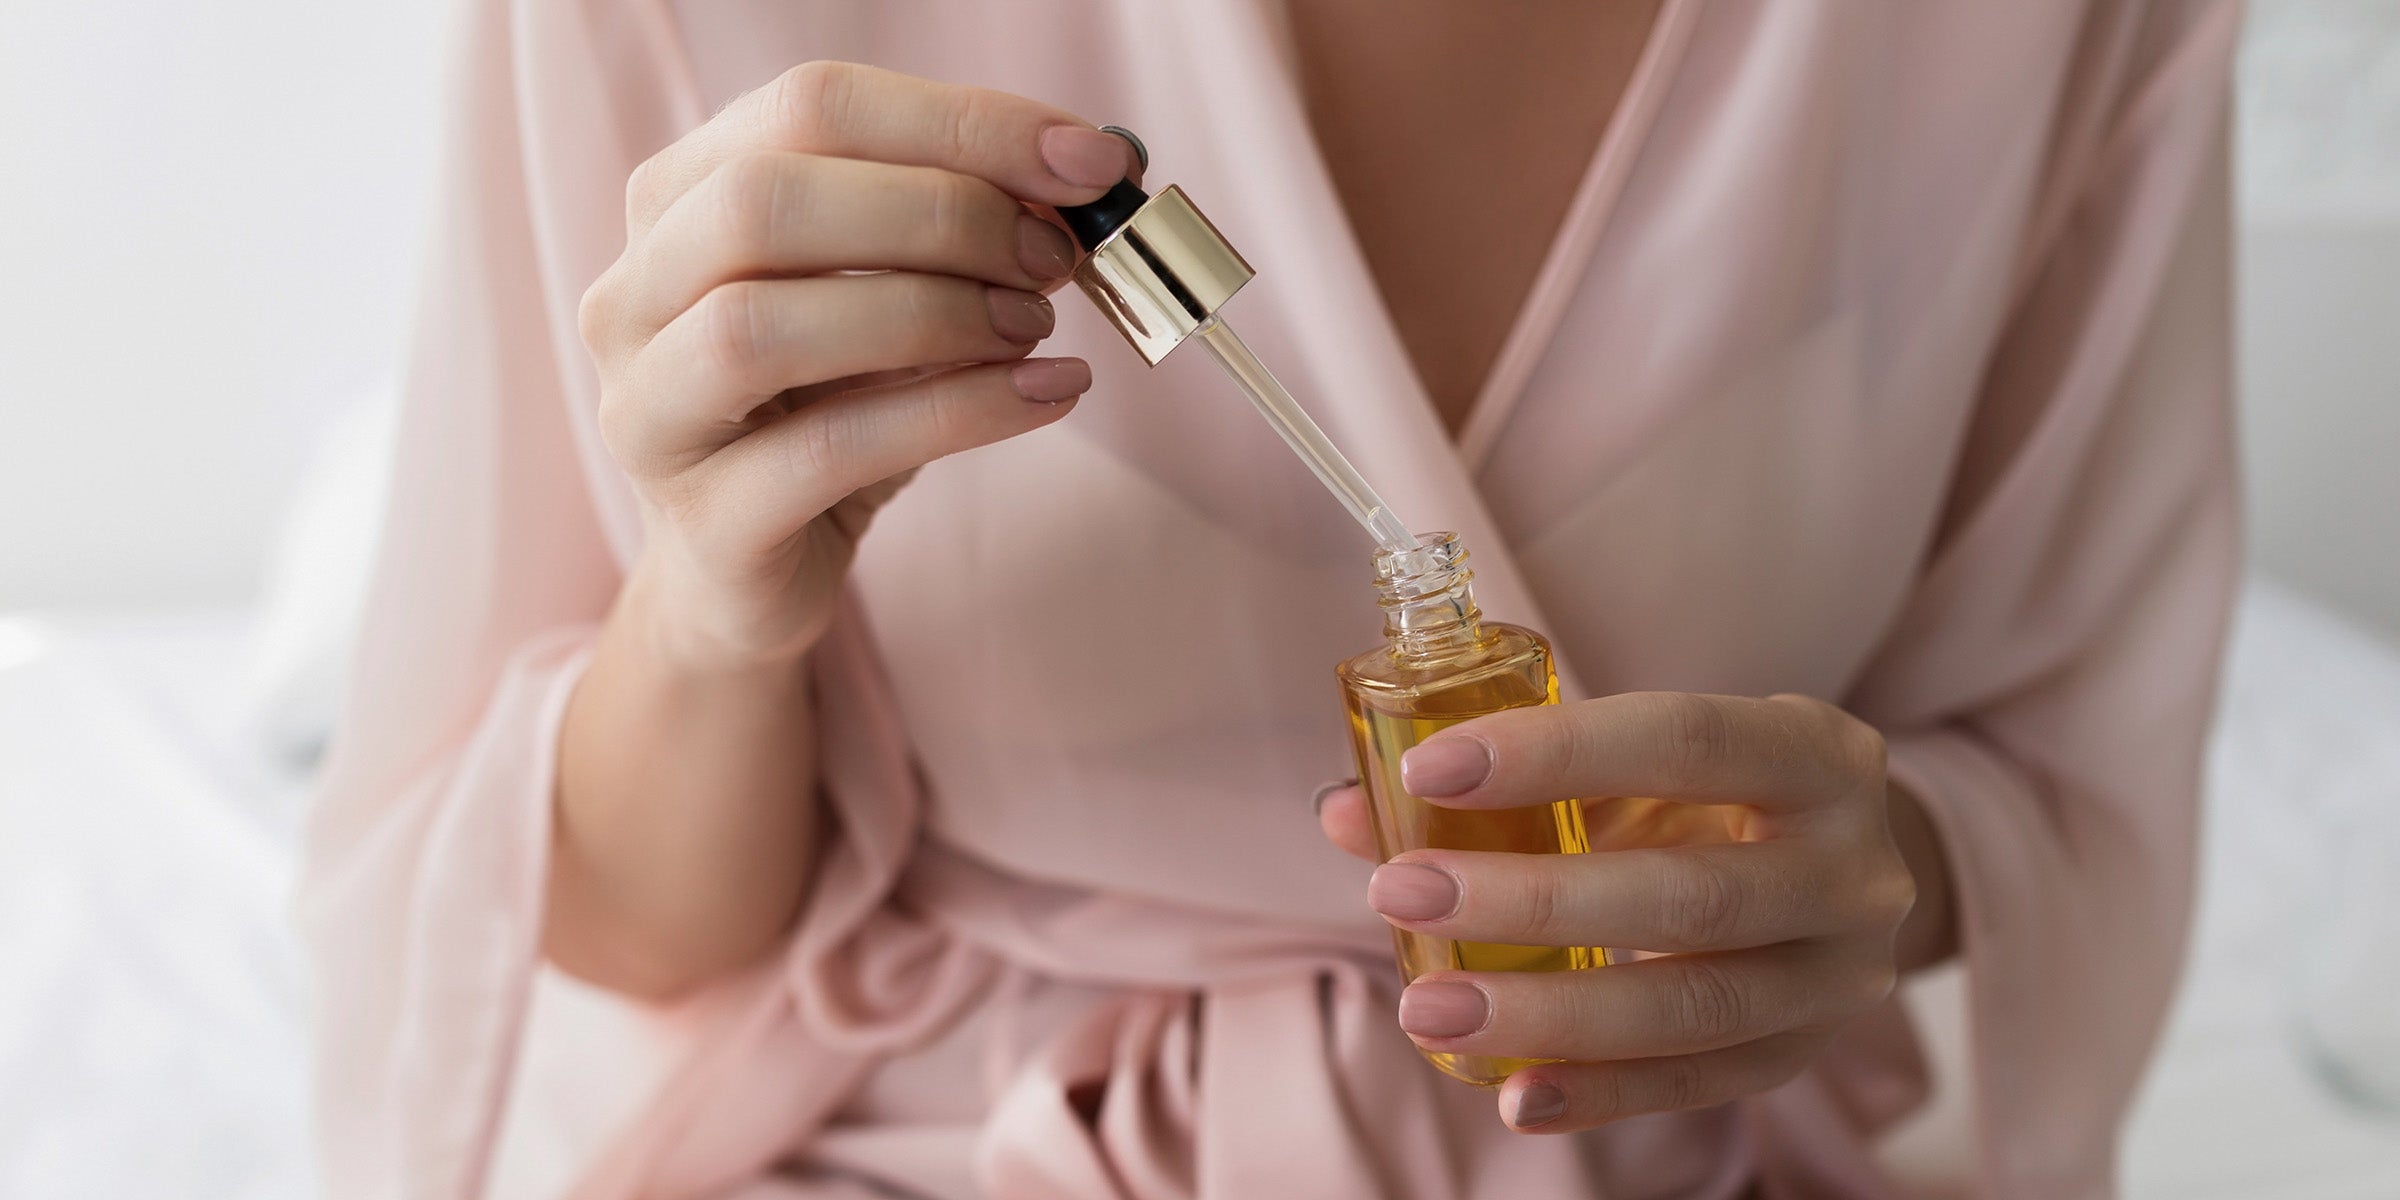 Anti aging secrets of using serum for older skin